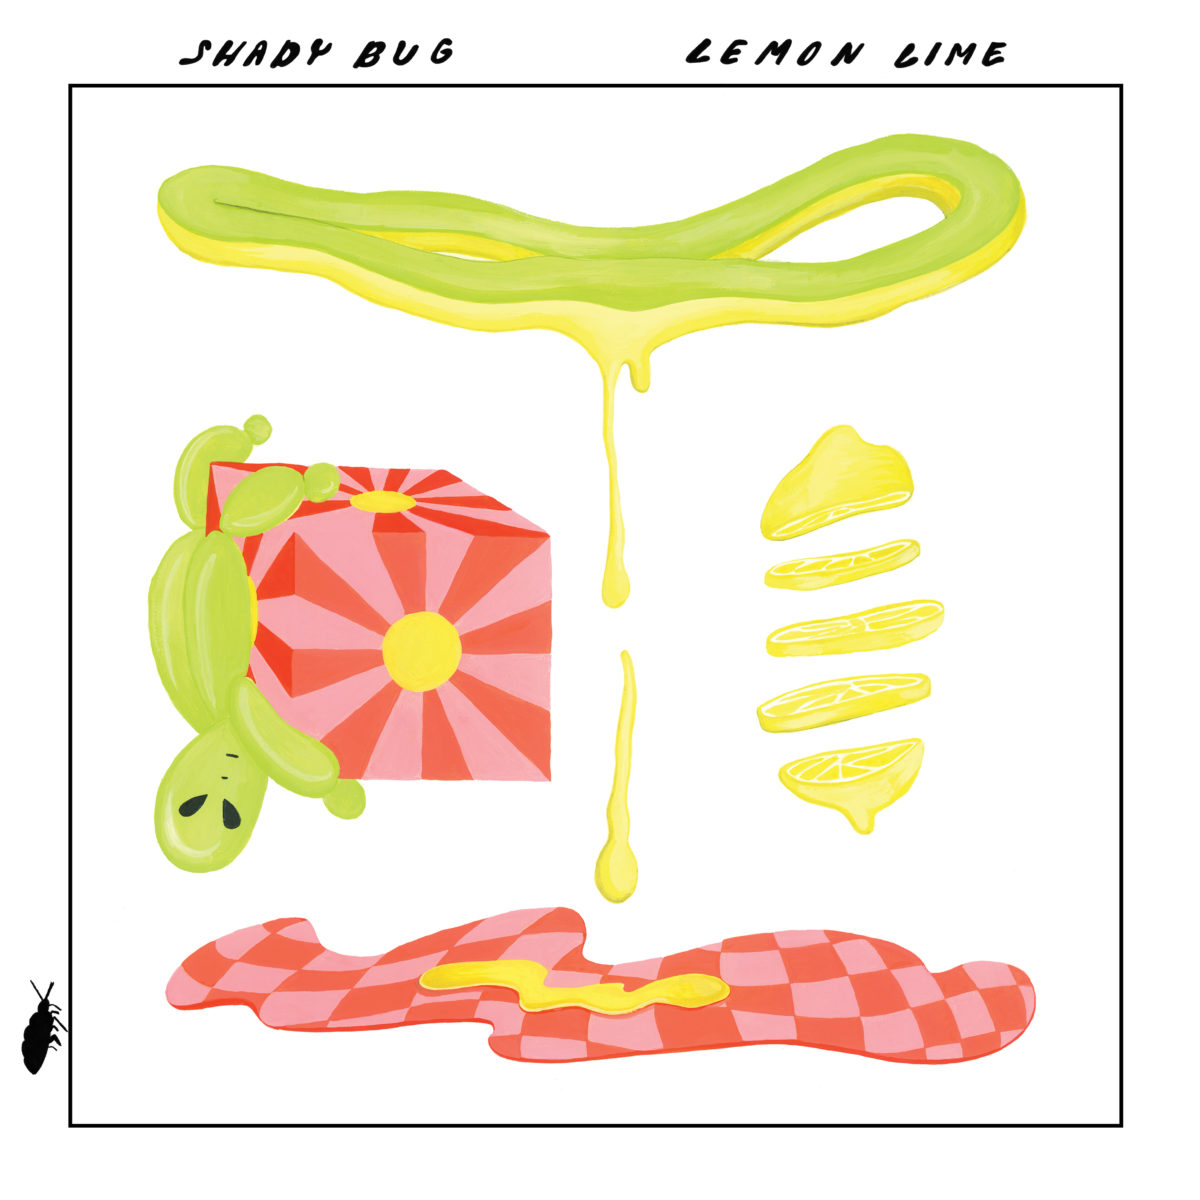 Shady Bug | Lemon Lime | 3hive.com